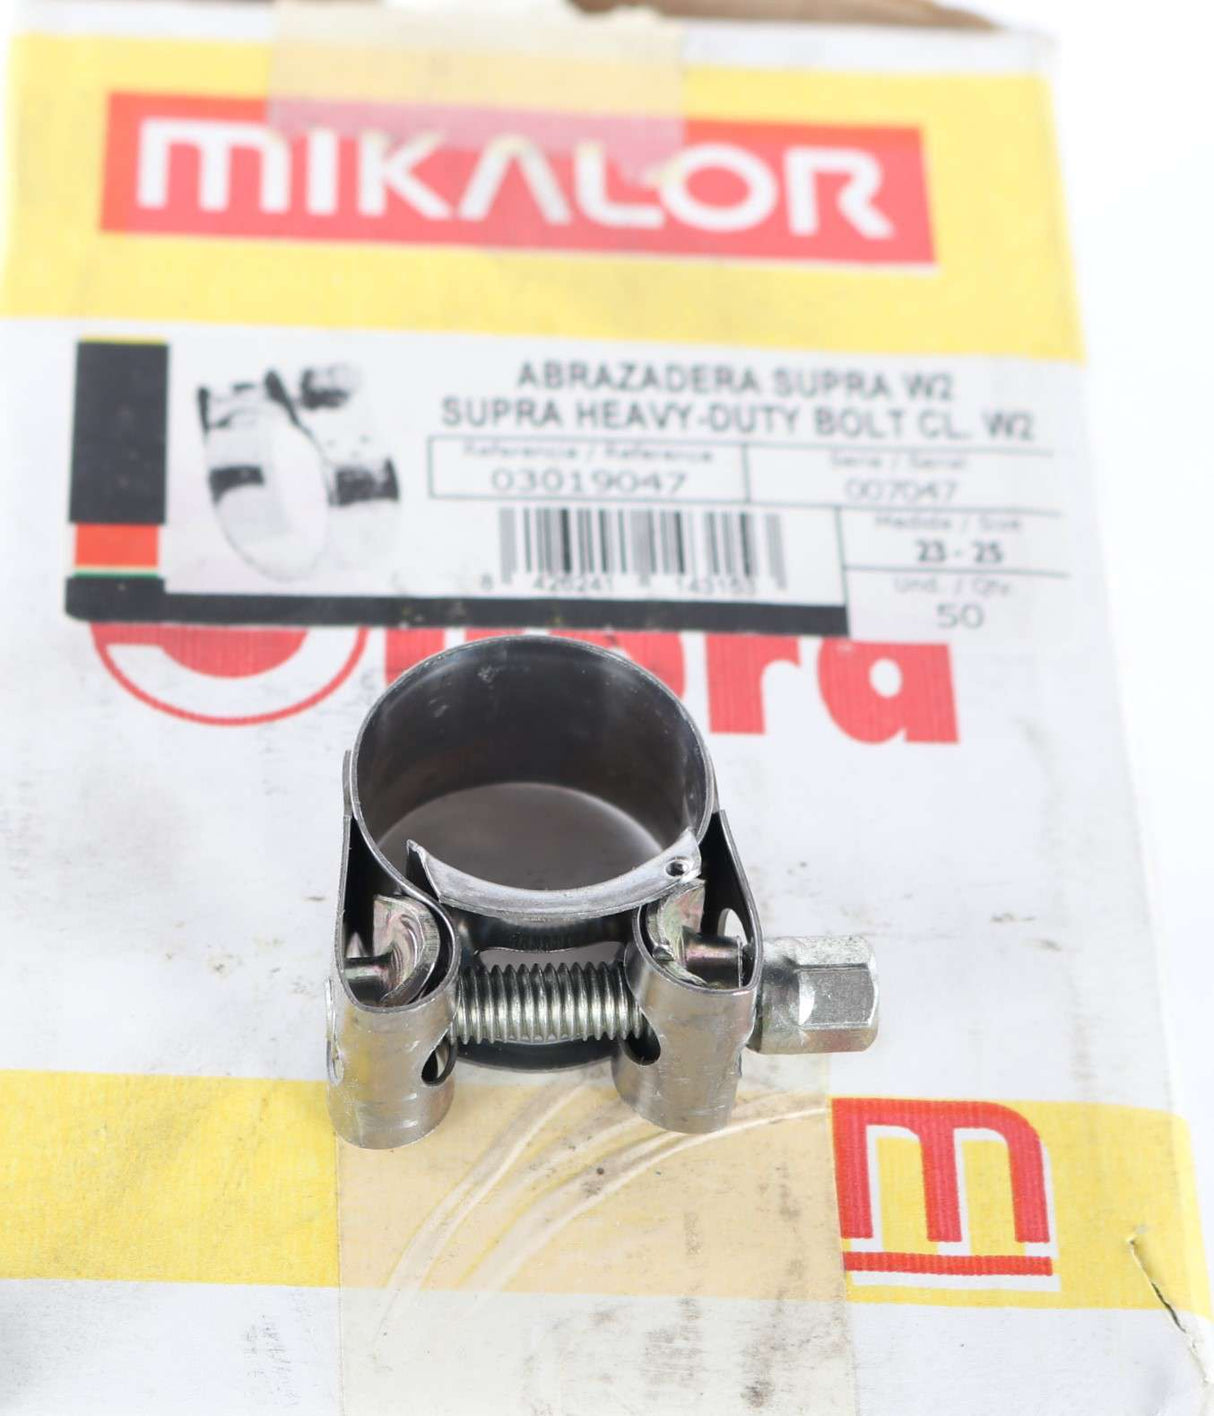 MIKALOR ­-­ 03019047 ­-­ CLAMP-HOSE 23-25mm DIA W/SCREW